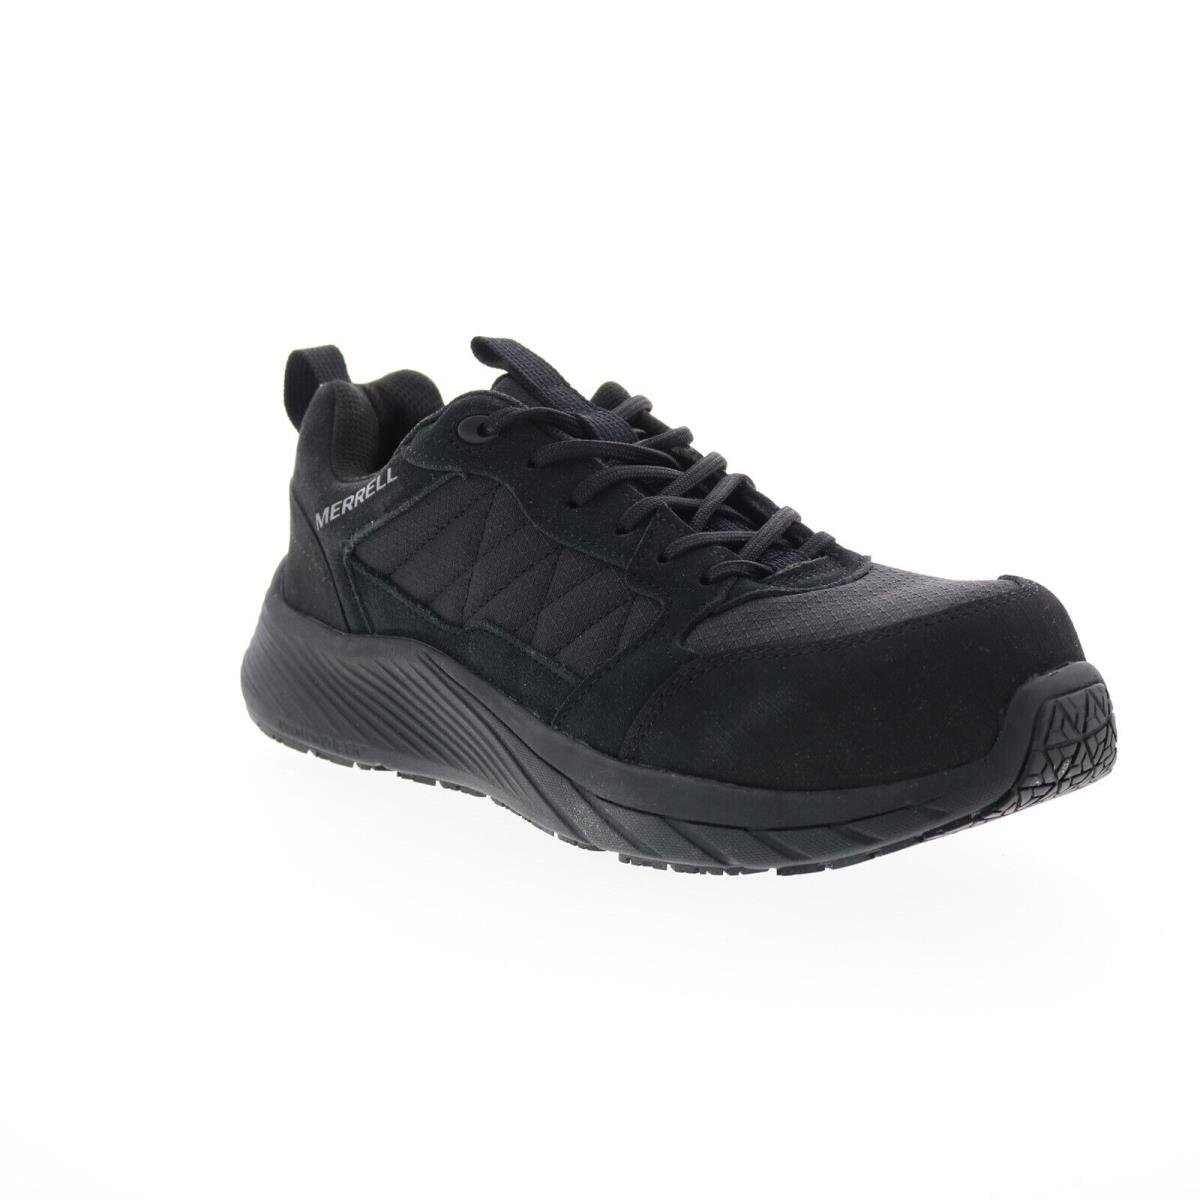 Merrell Alpine Sneaker Carbon Fiber J004619 Mens Black Athletic Work Shoes - Black